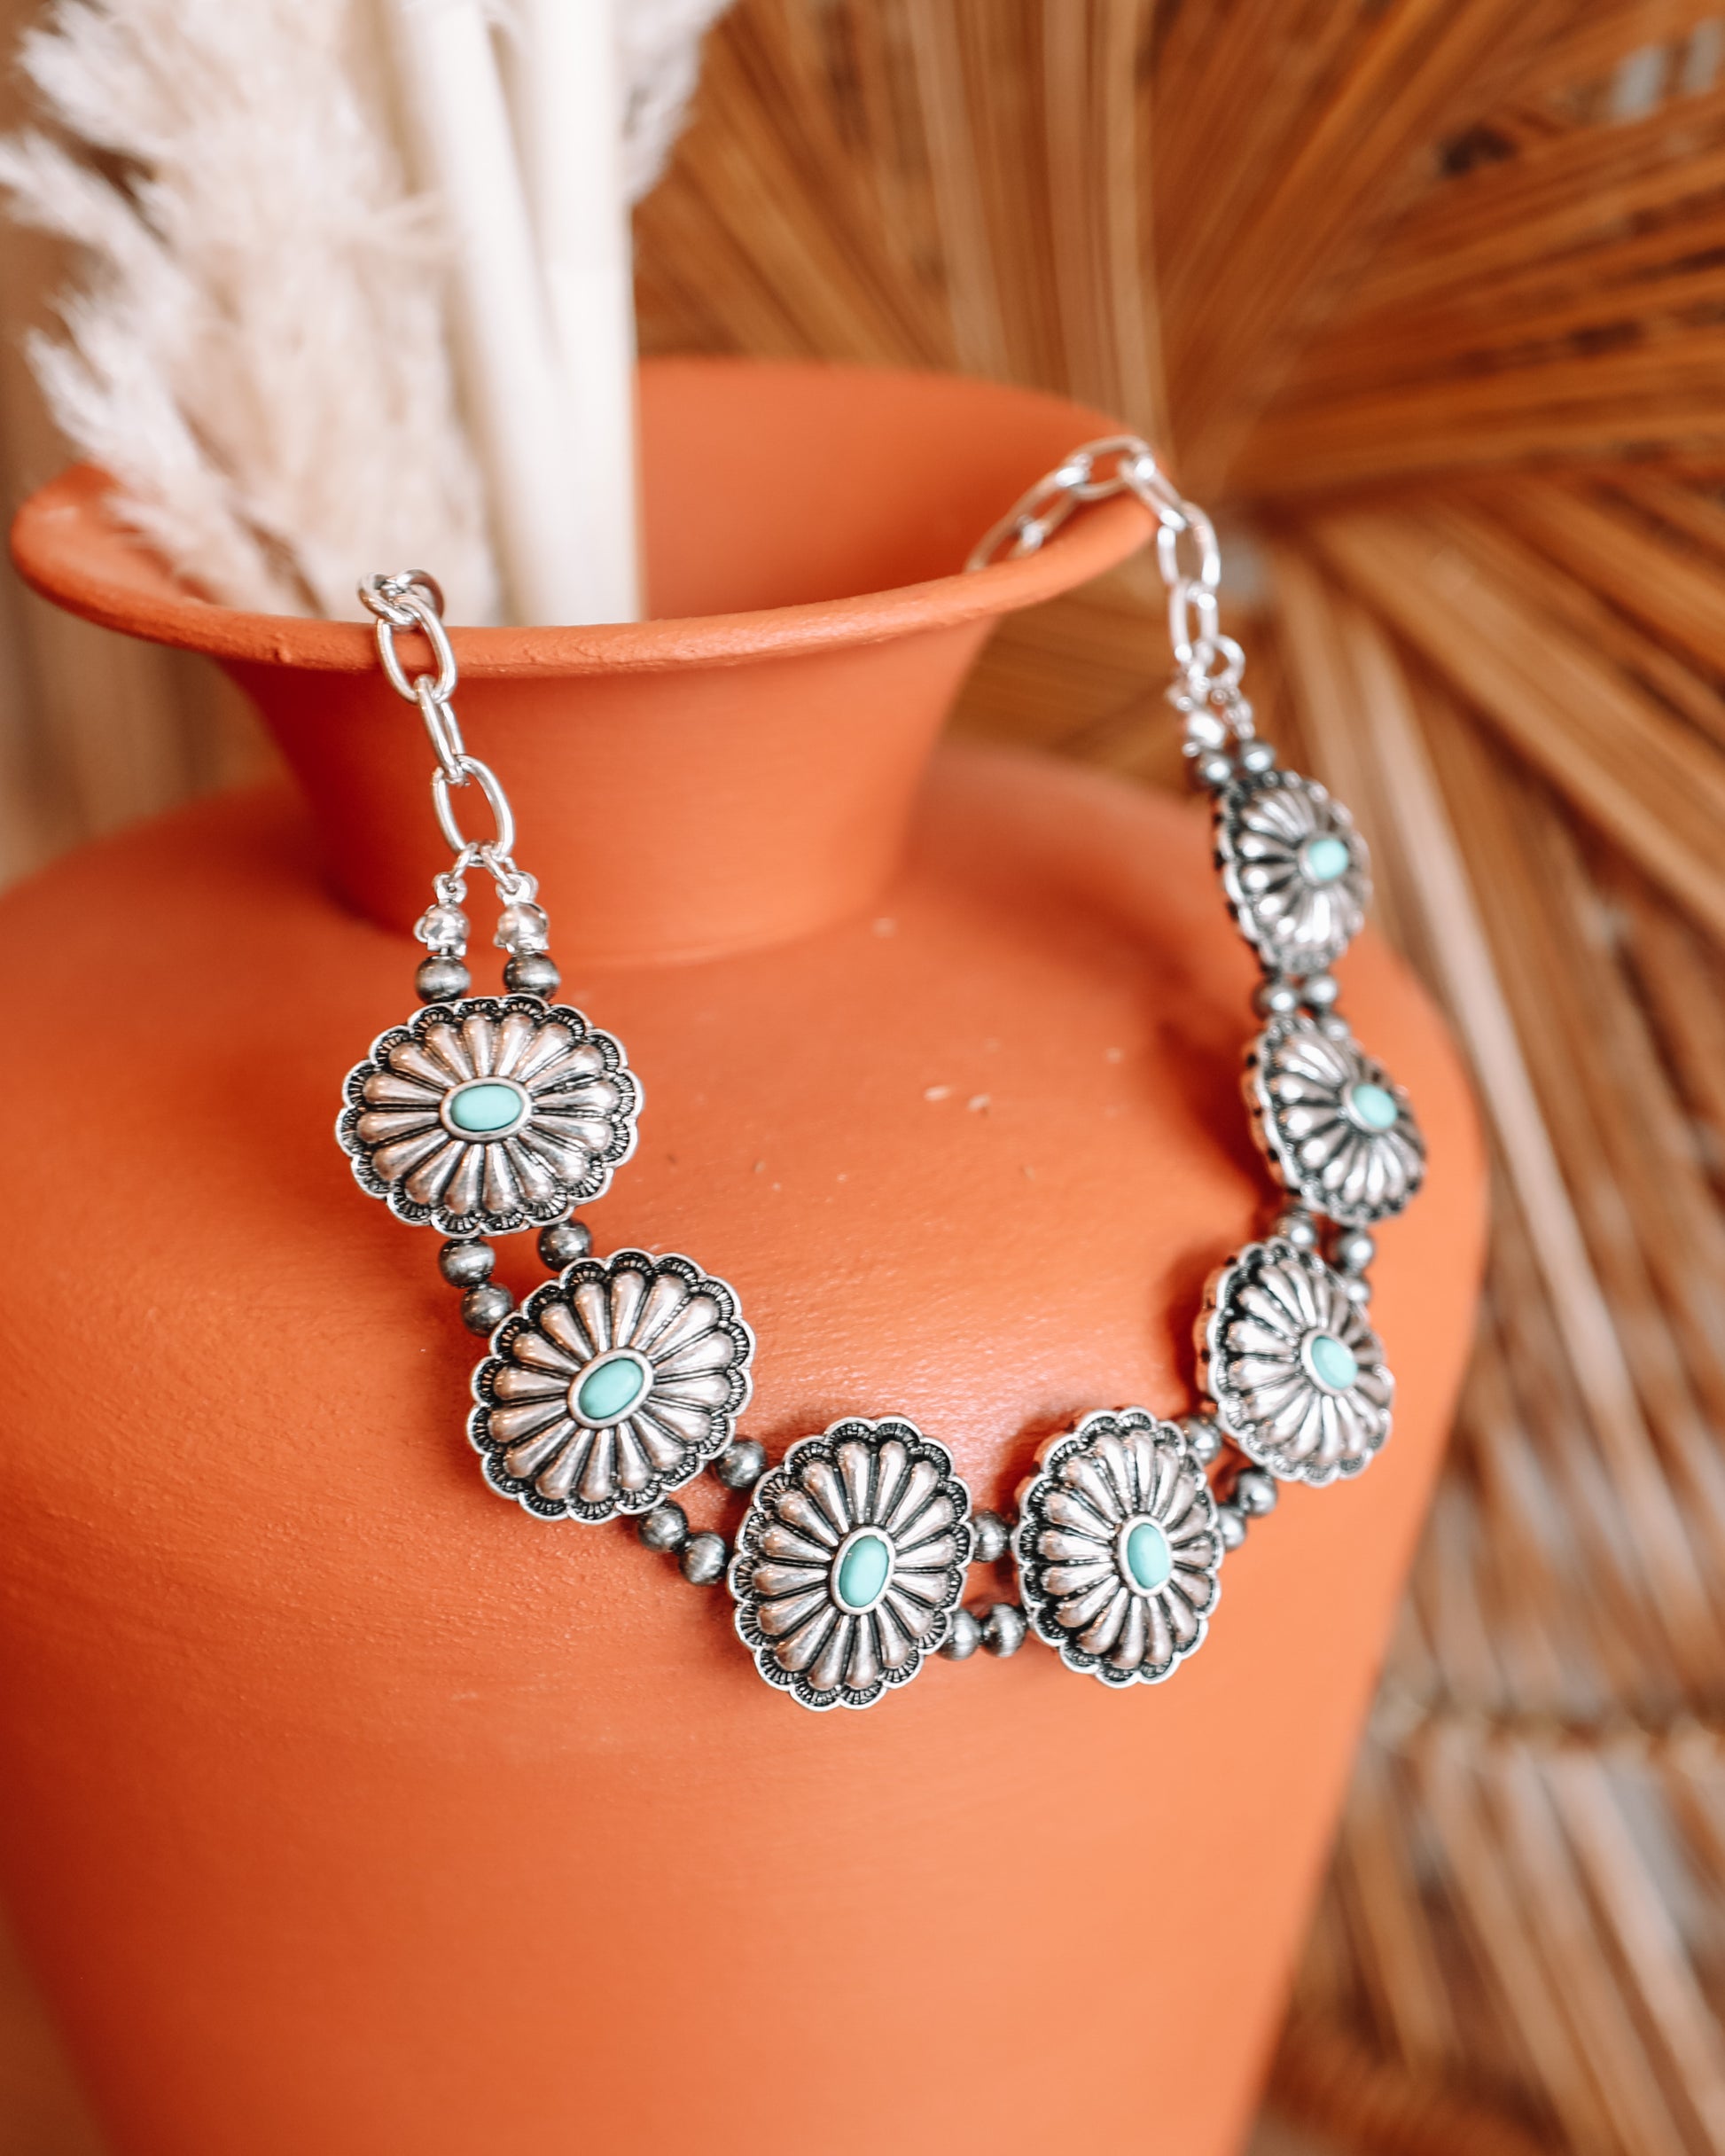 Concho necklace western style turquoise embellishment